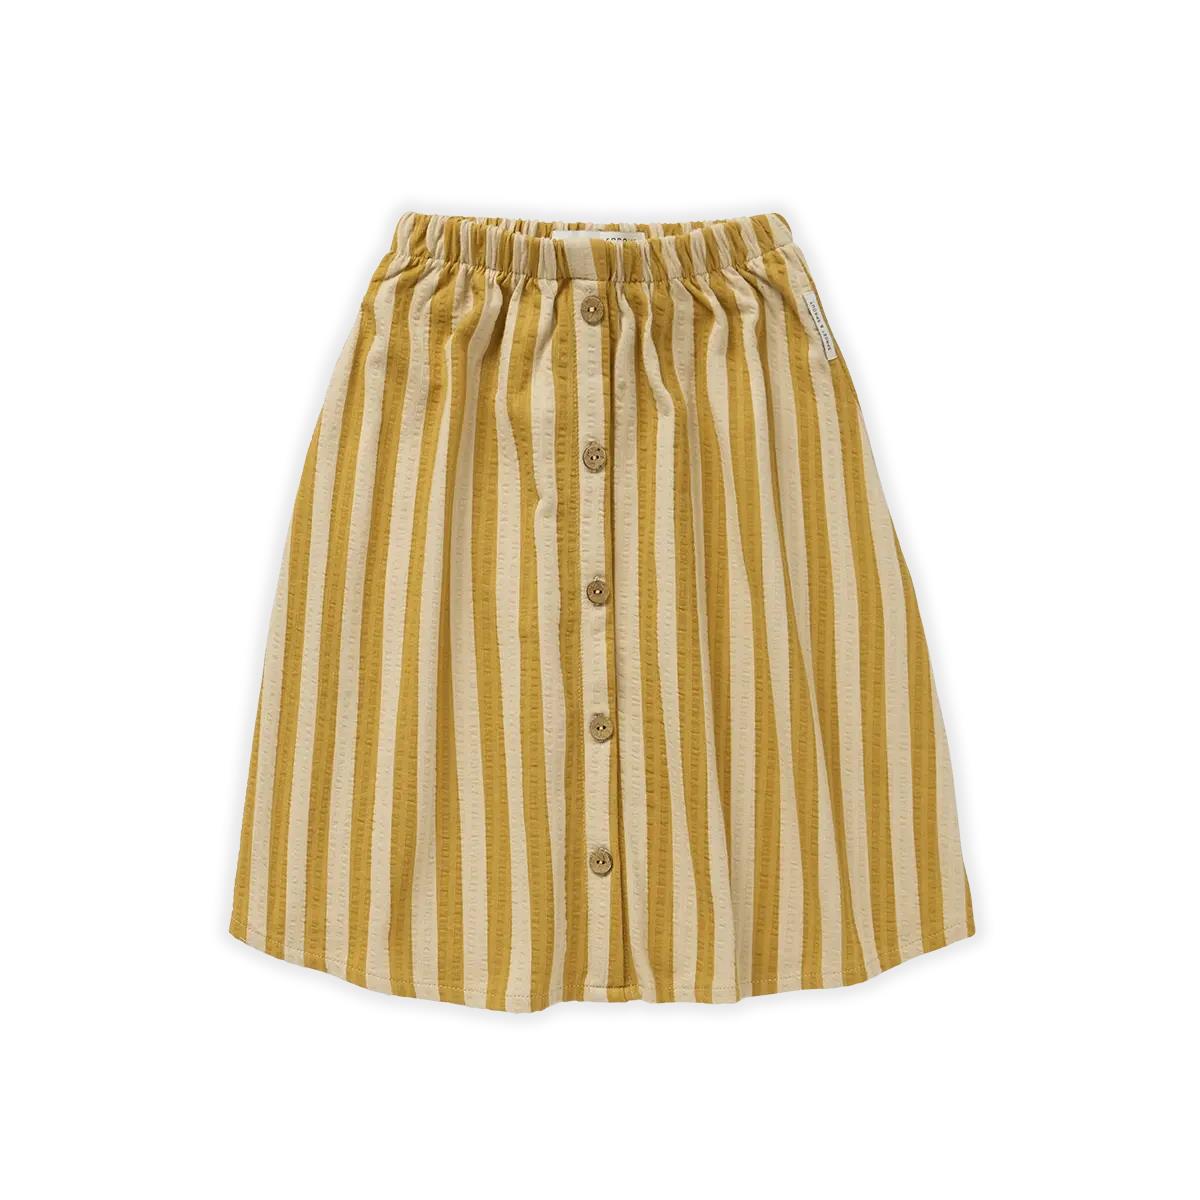 SPROET & SPROUT - Skirt midi stripe